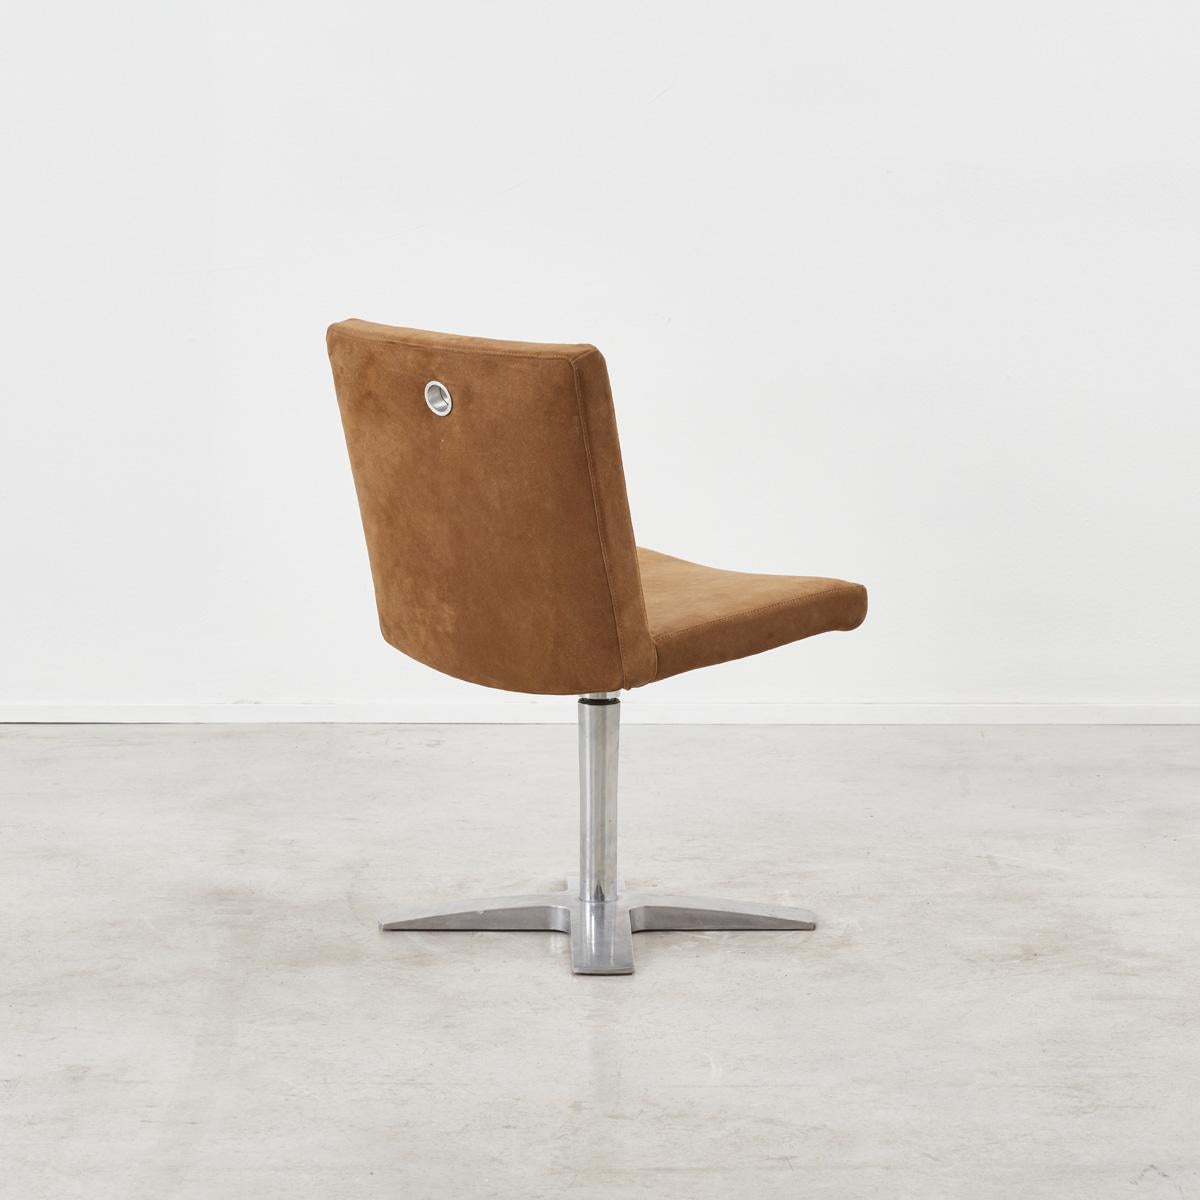 Modern Harri Korhonen Suede Desk Chair for Inno, Finland 2000s For Sale